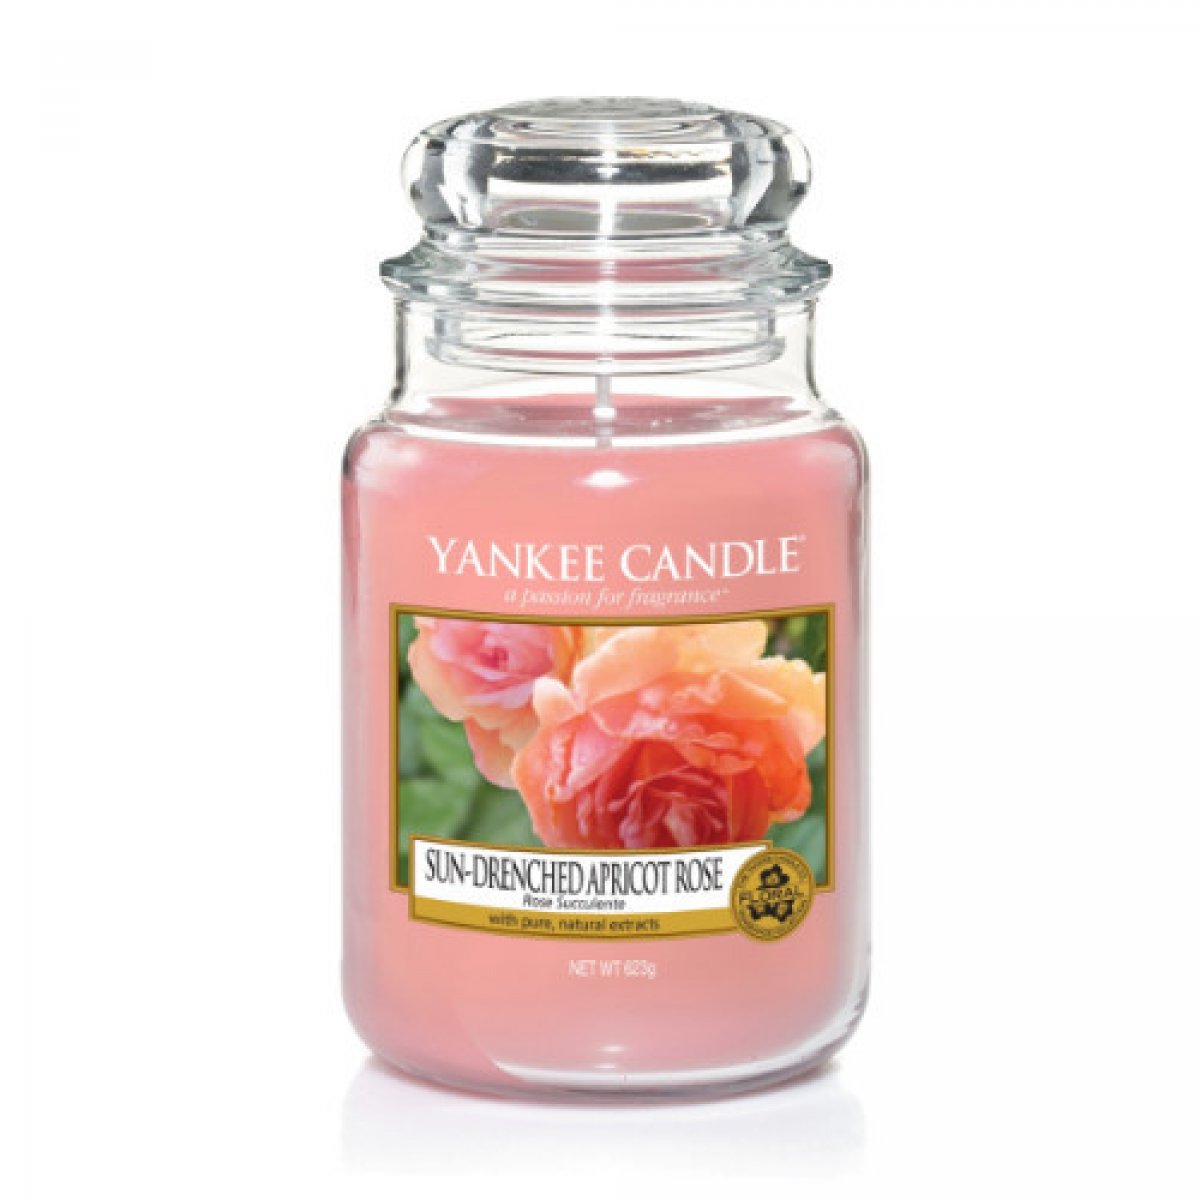 Giara grande Yankee Candle Sun-Drenched Apricot Rose Fragranza fruttata